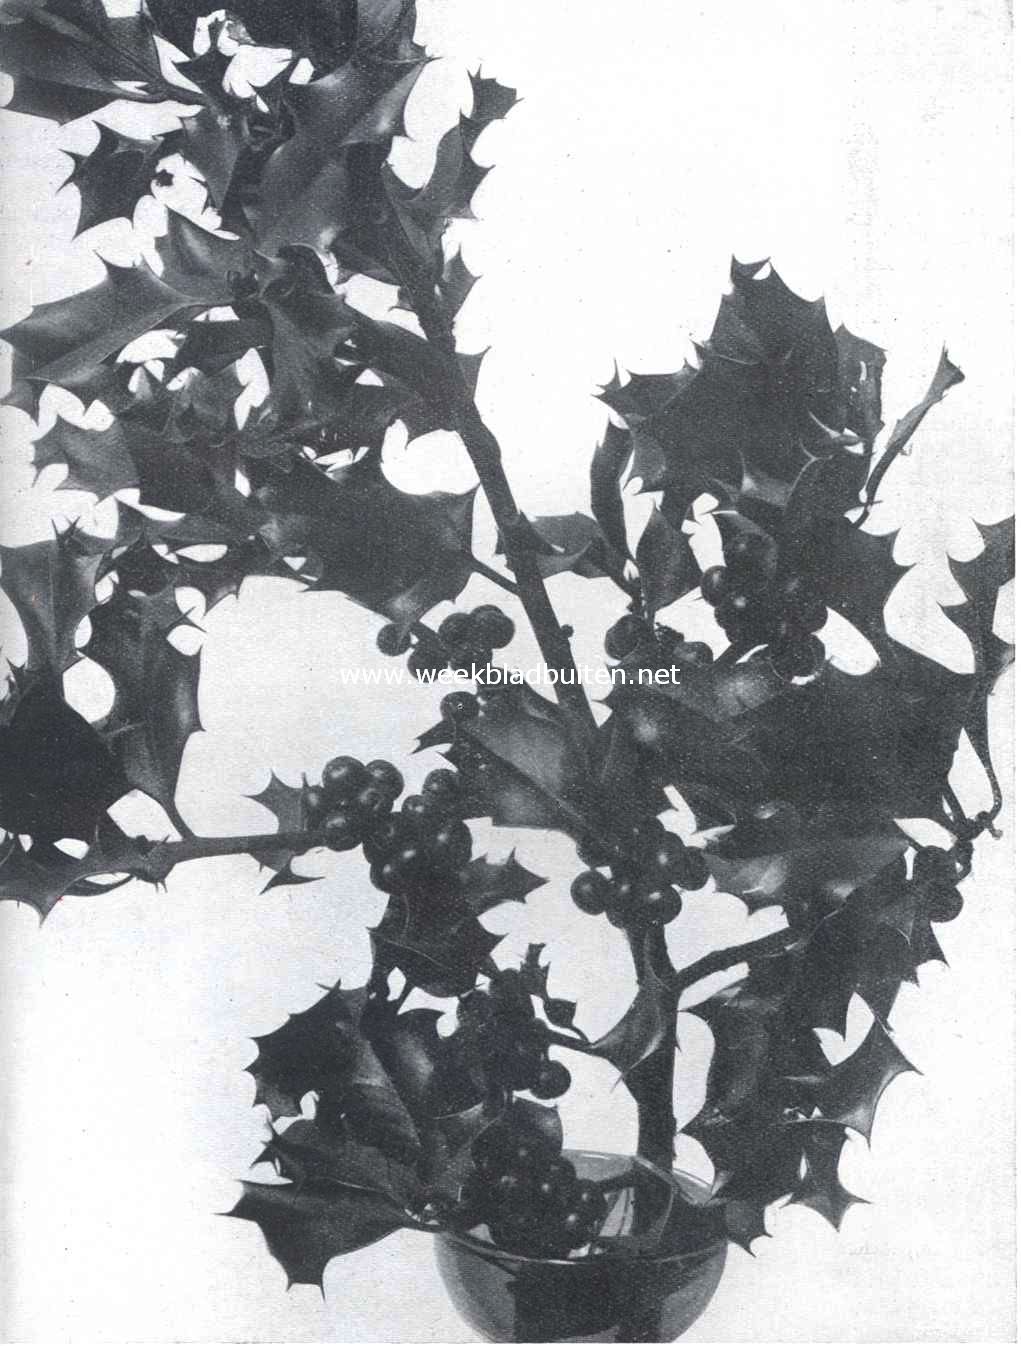 Gewone hulst (Ilex Aquifolium) met bessen